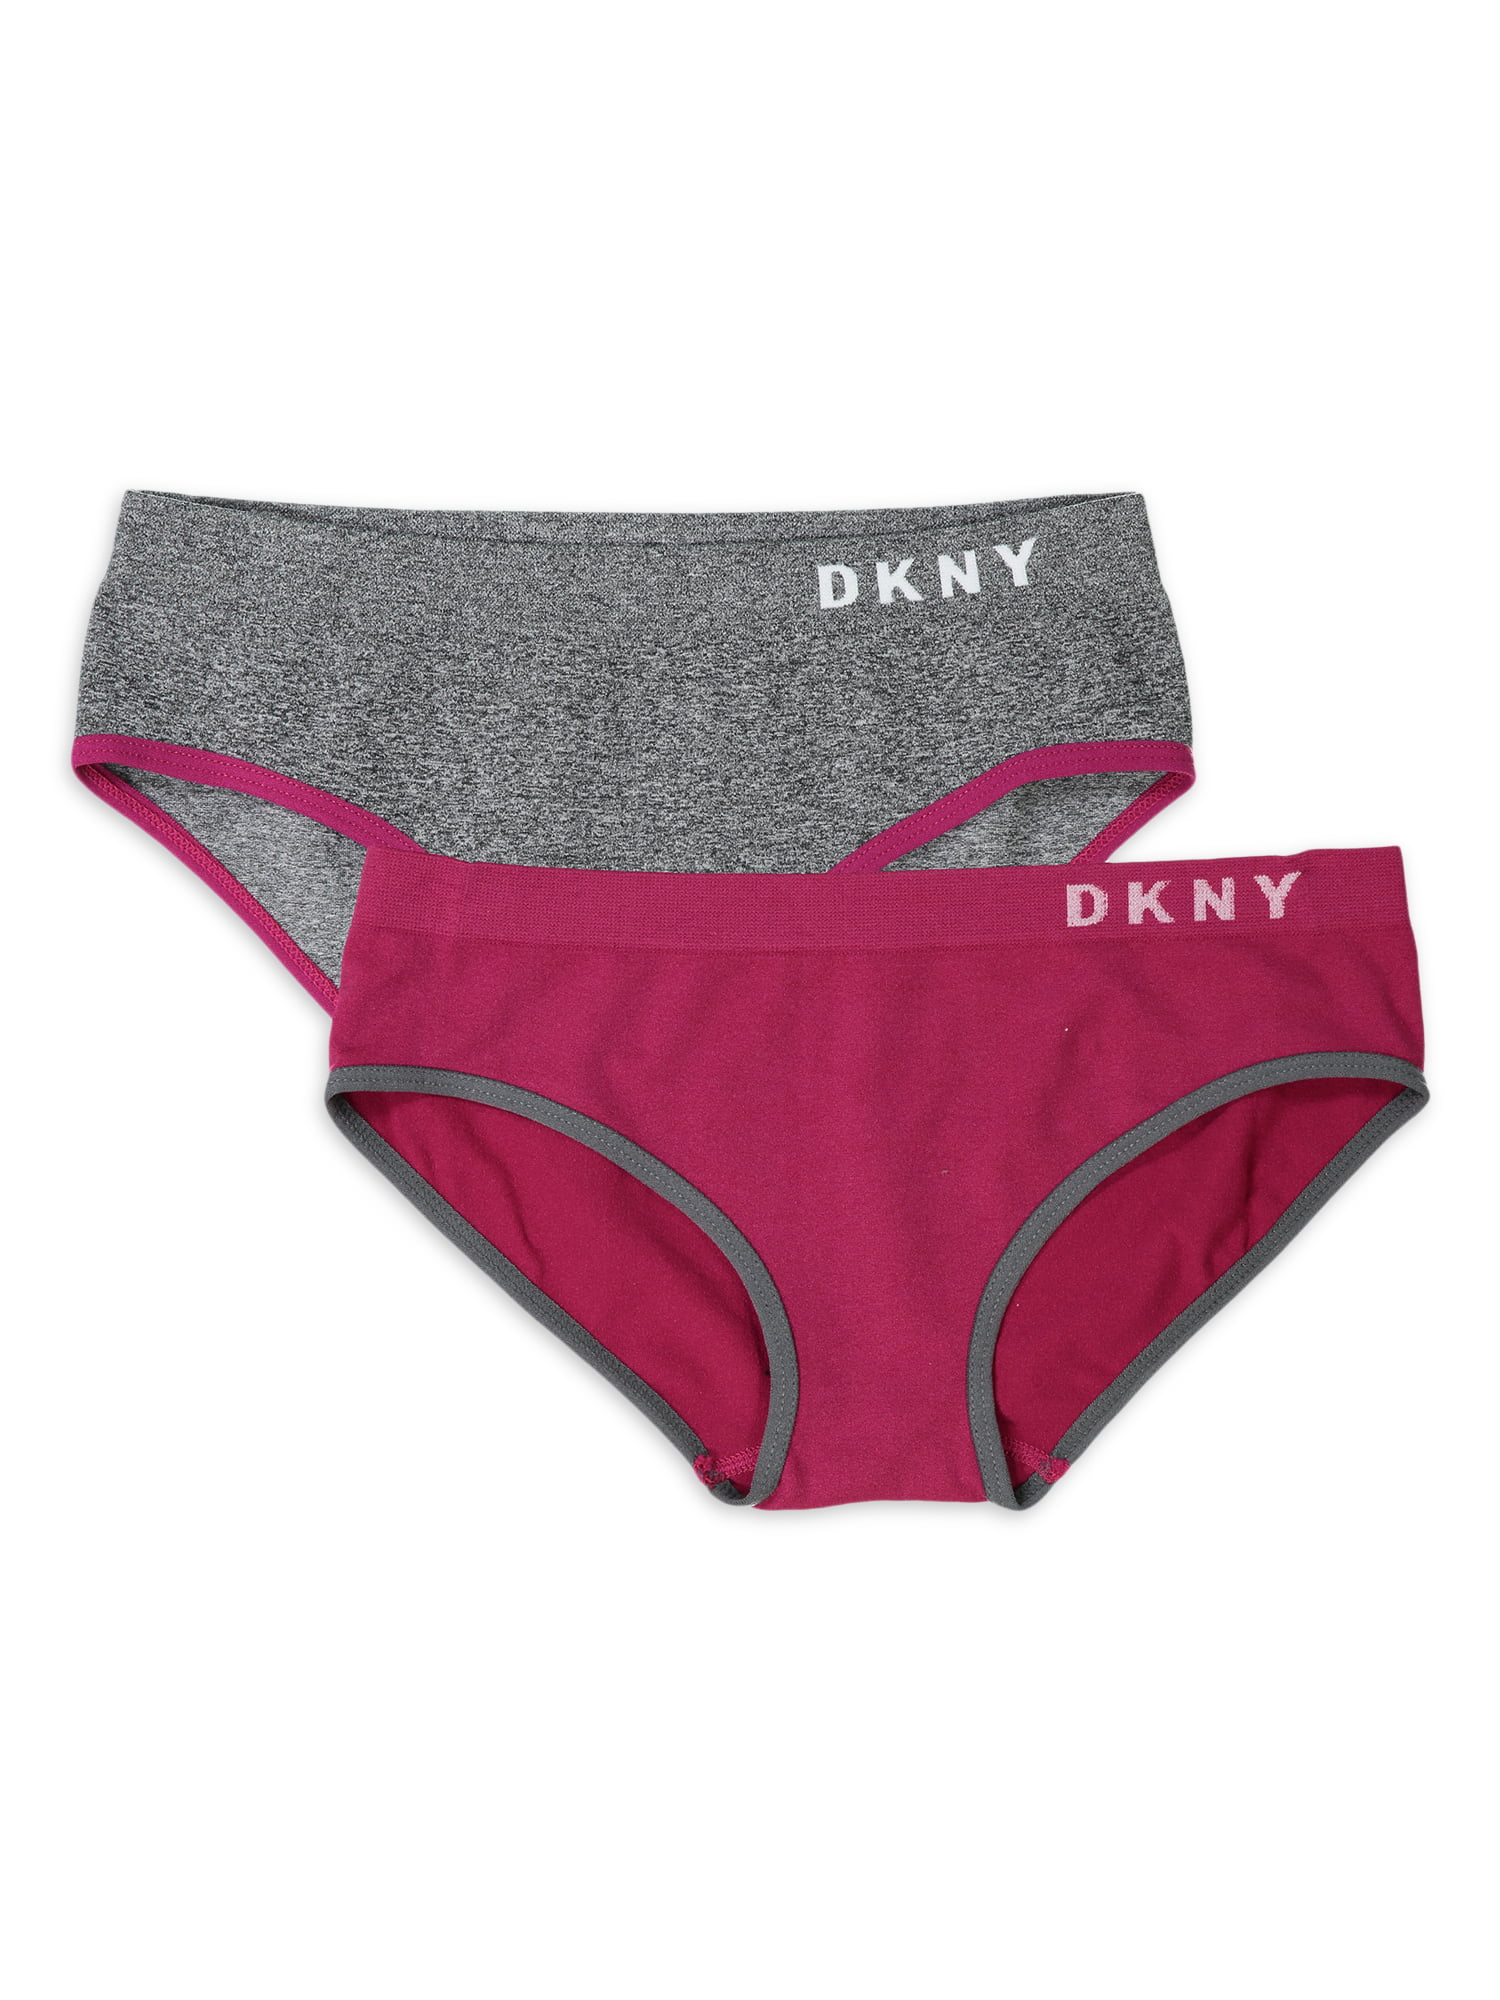 Dkny Kids Teen Underwear - Designer Kidswear at Farfetch Canada